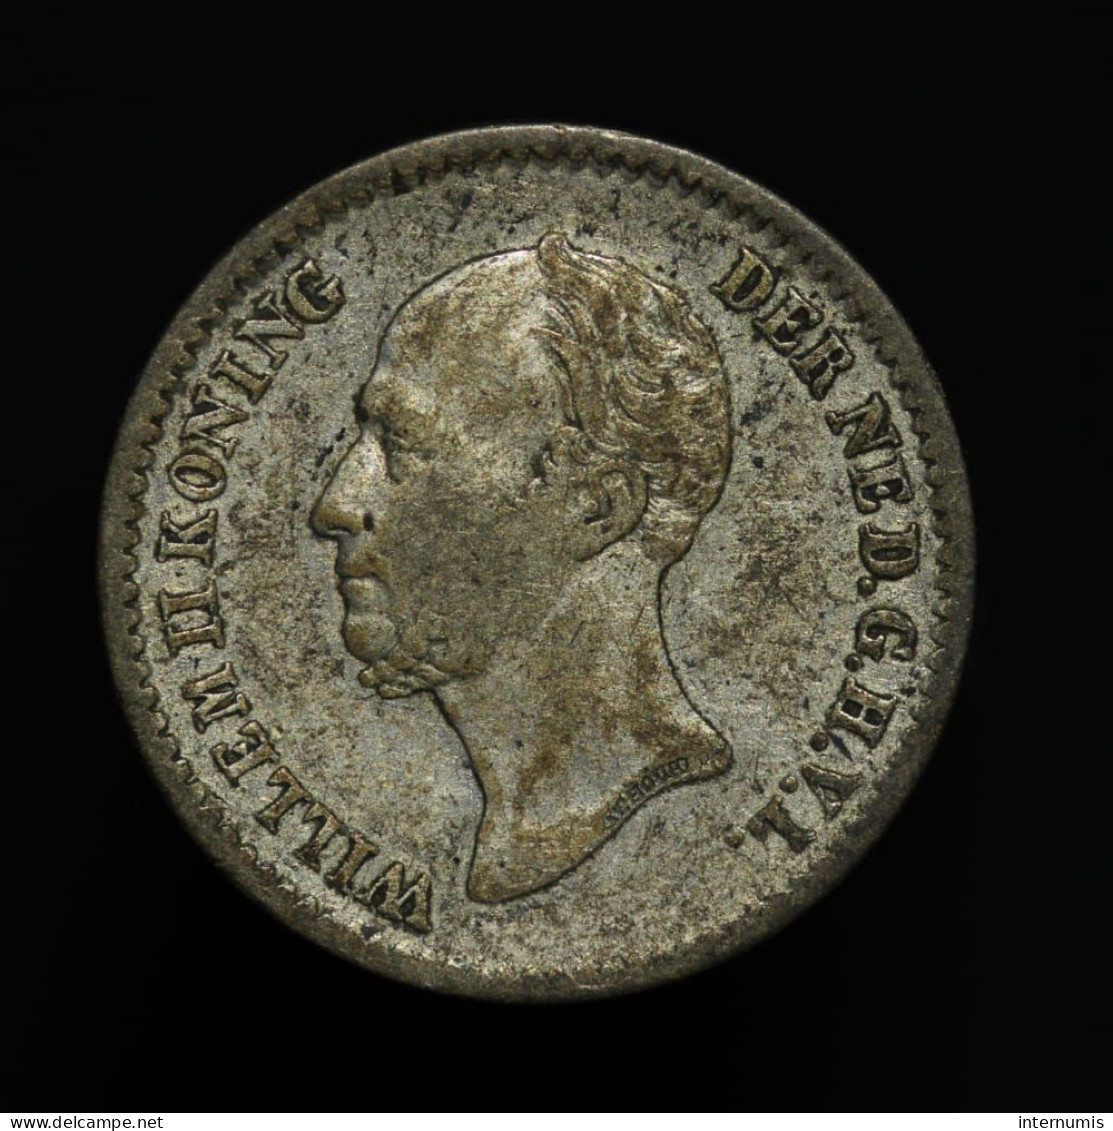 Pays Bas / Netherlands, Willem II, 10 Cents, 1849, Argent (Silver), TTB (EF), KM#75 - 1840-1849: Willem II